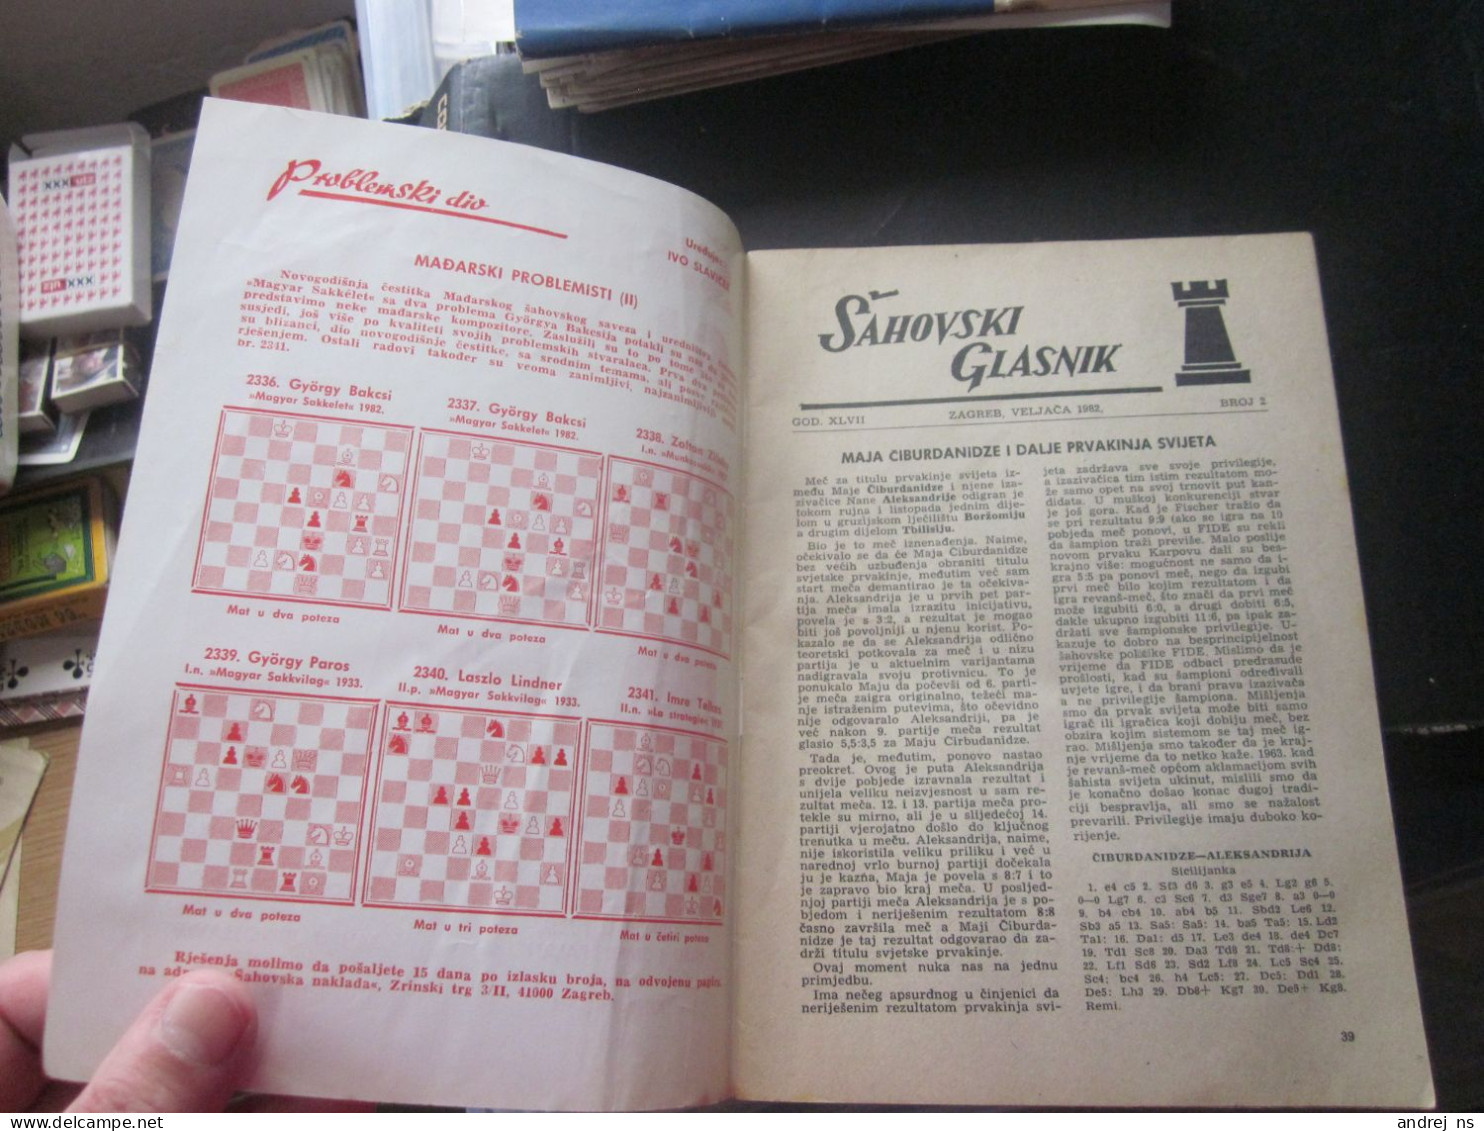 Sahovski Glasnik Chess 1982 - Scandinavian Languages